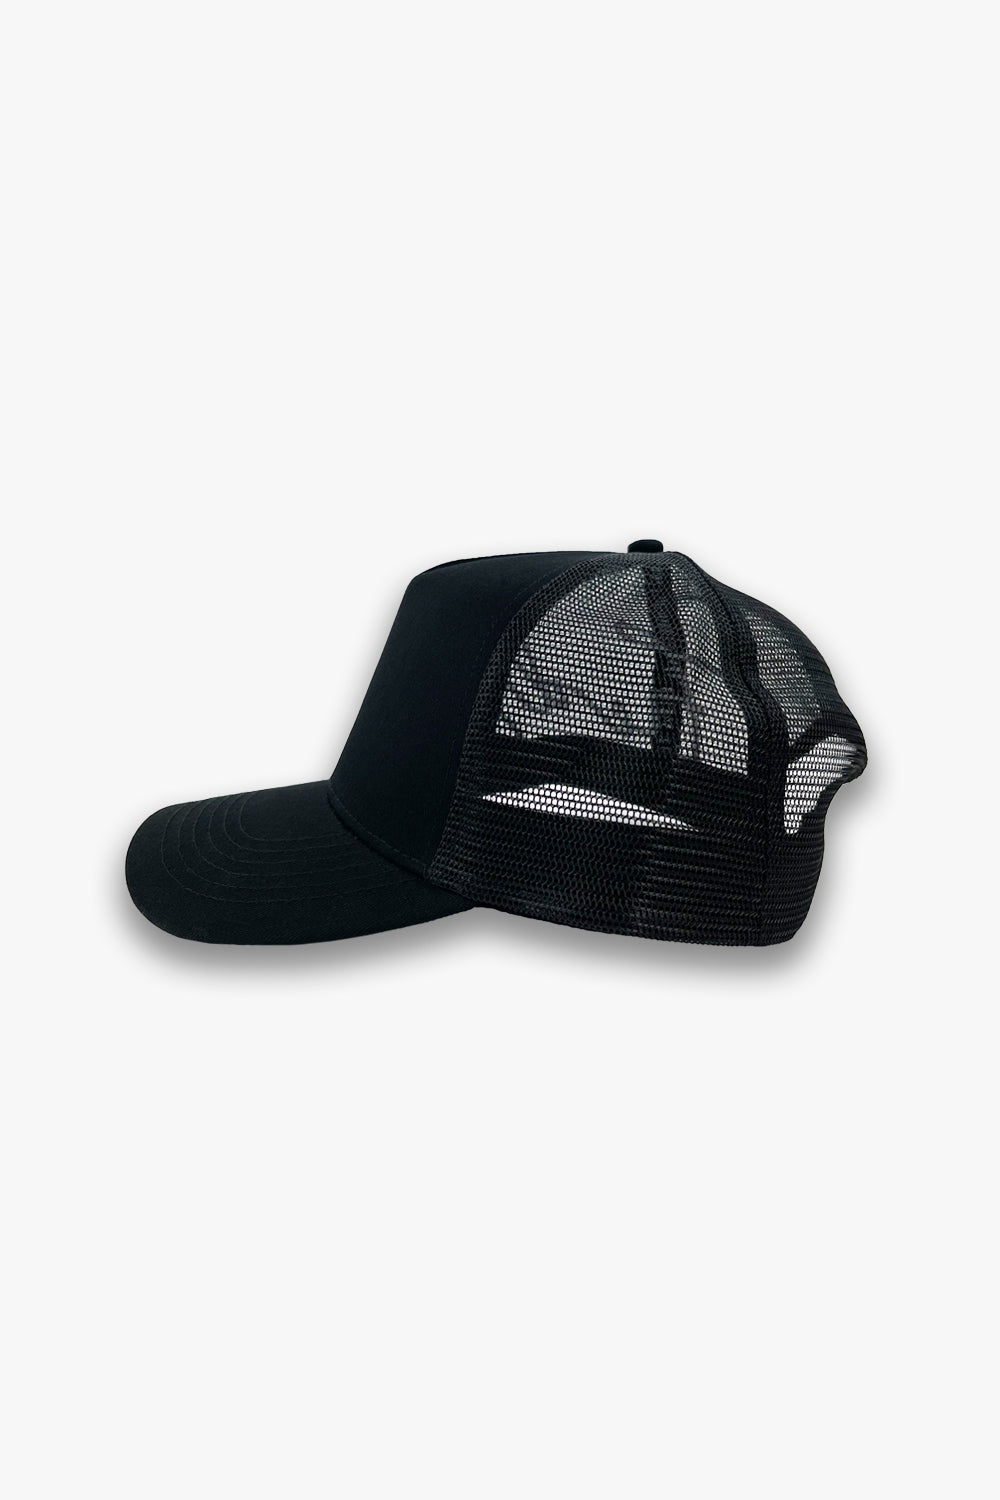 black designer trucker hat blank side view